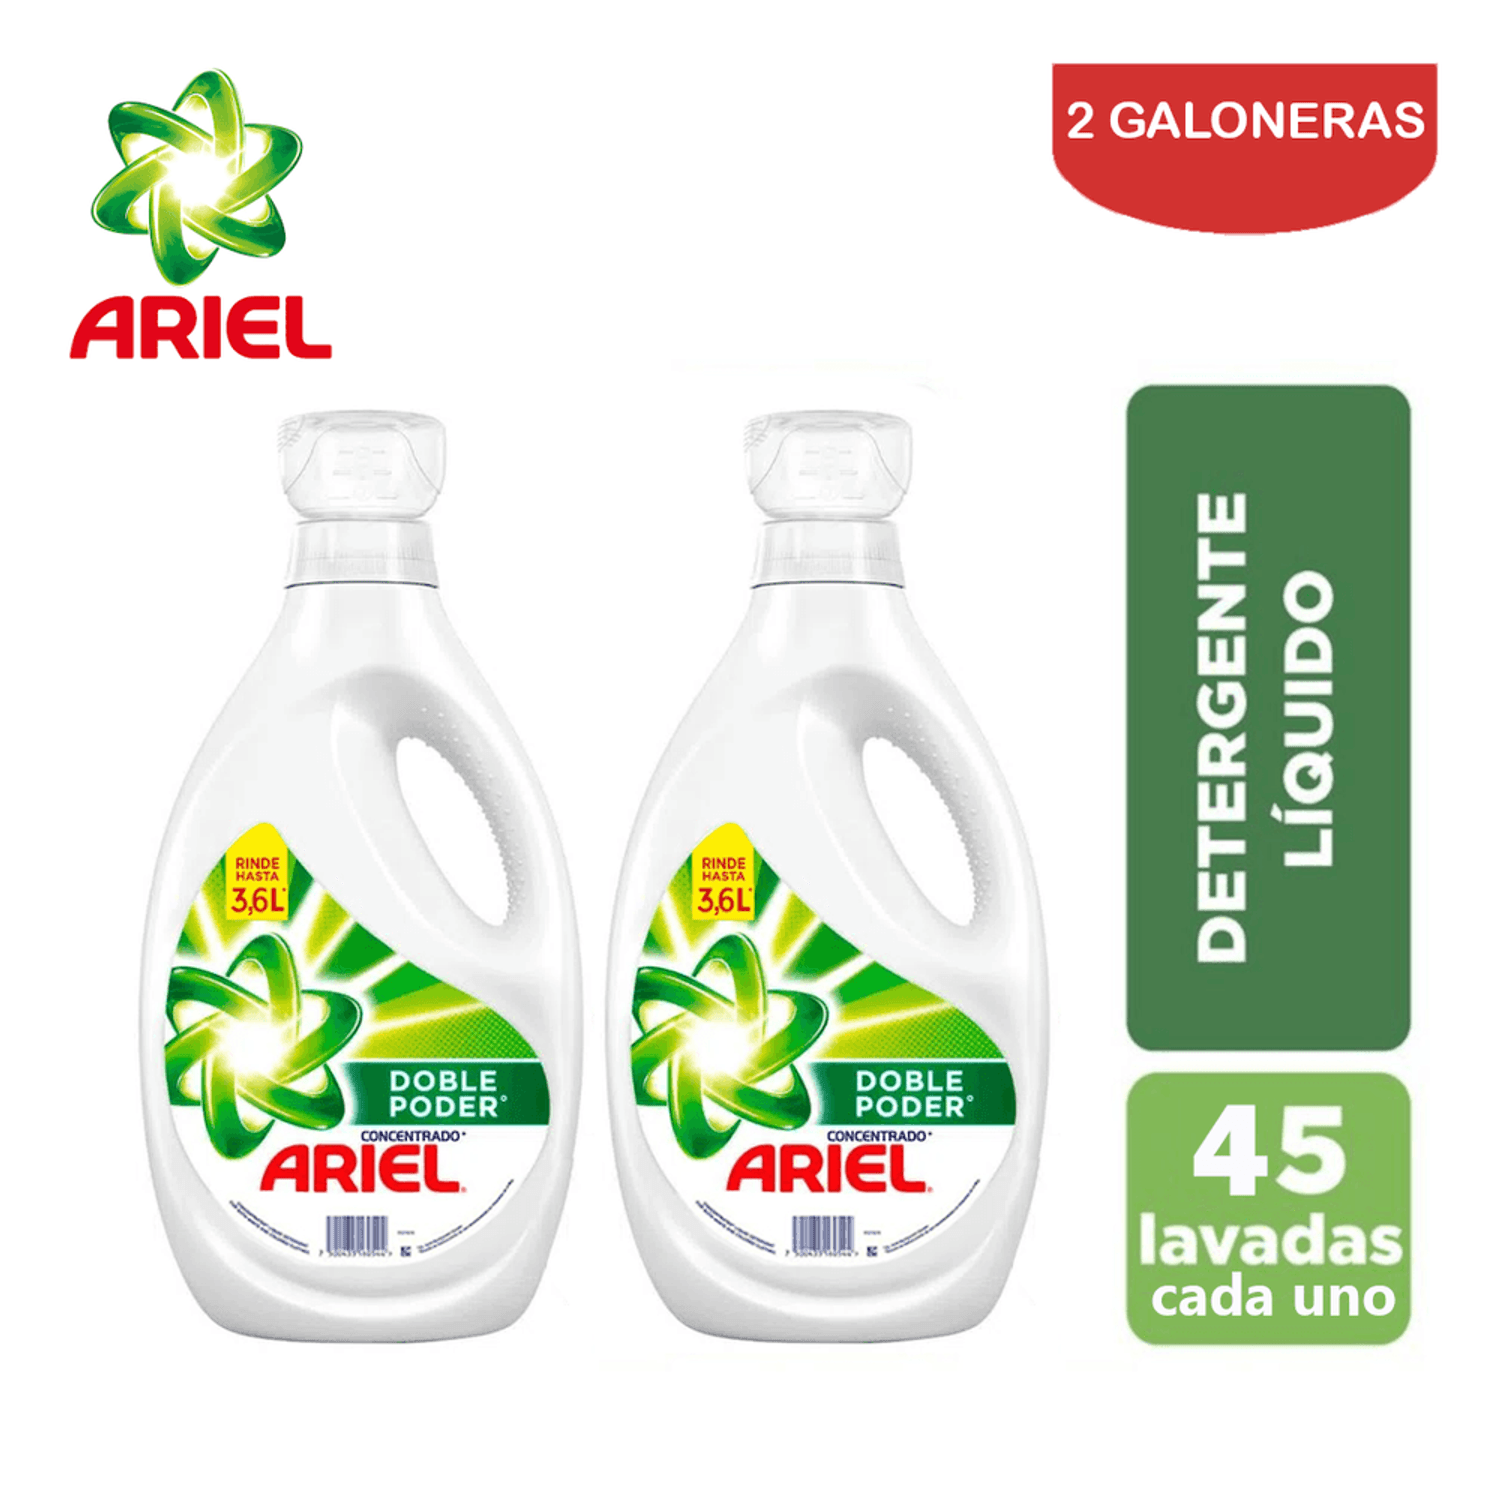 Detergente líquido Original Ariel 45 lavados.